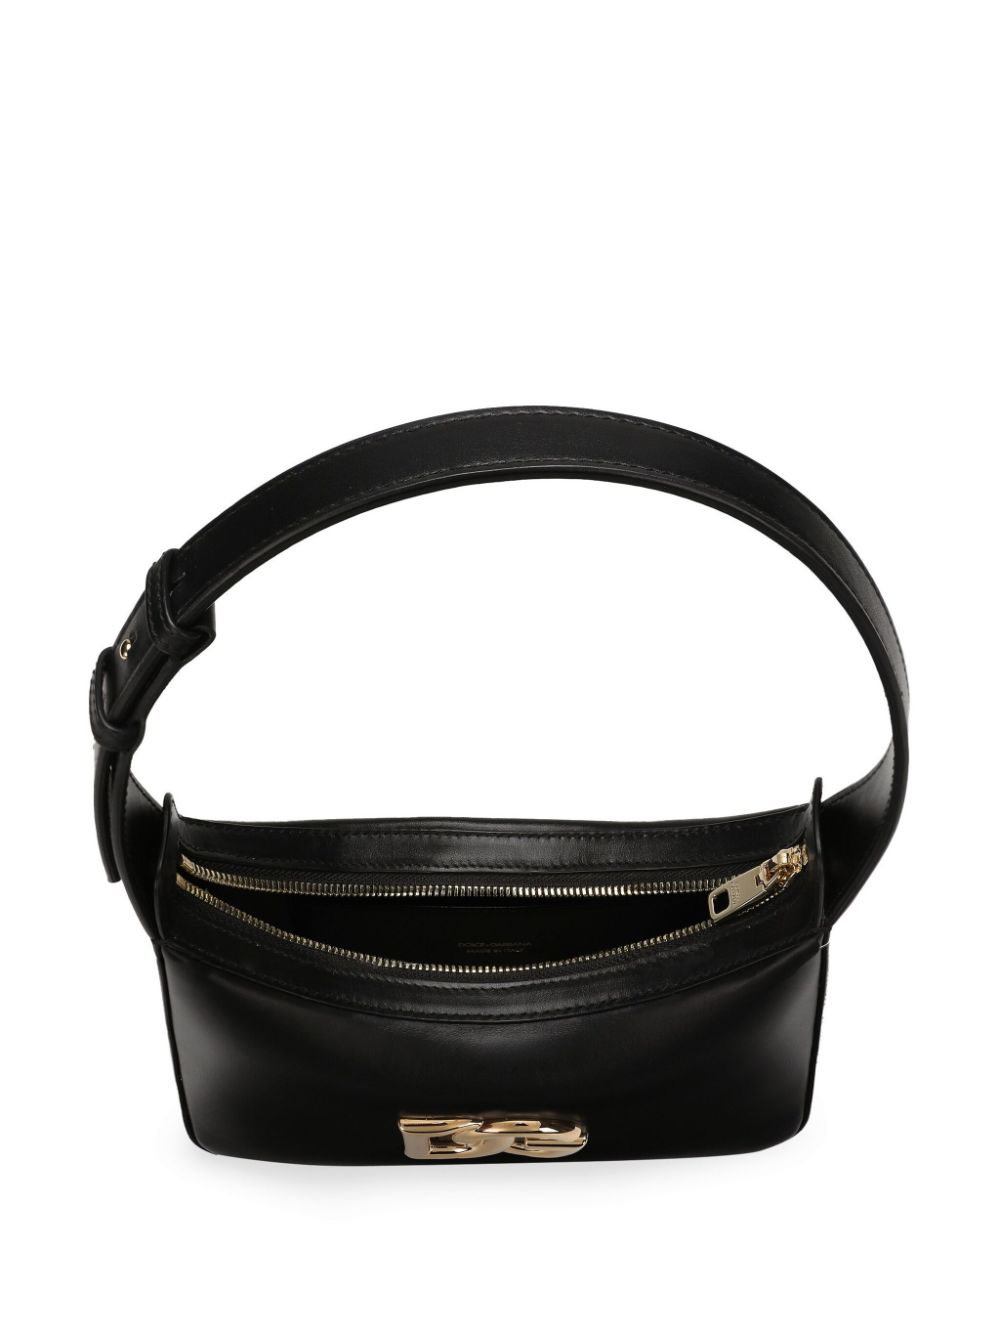 DOLCE & GABBANA Black Calfskin 3.5 Shoulder Handbag with Gold-Tone Metal Logo